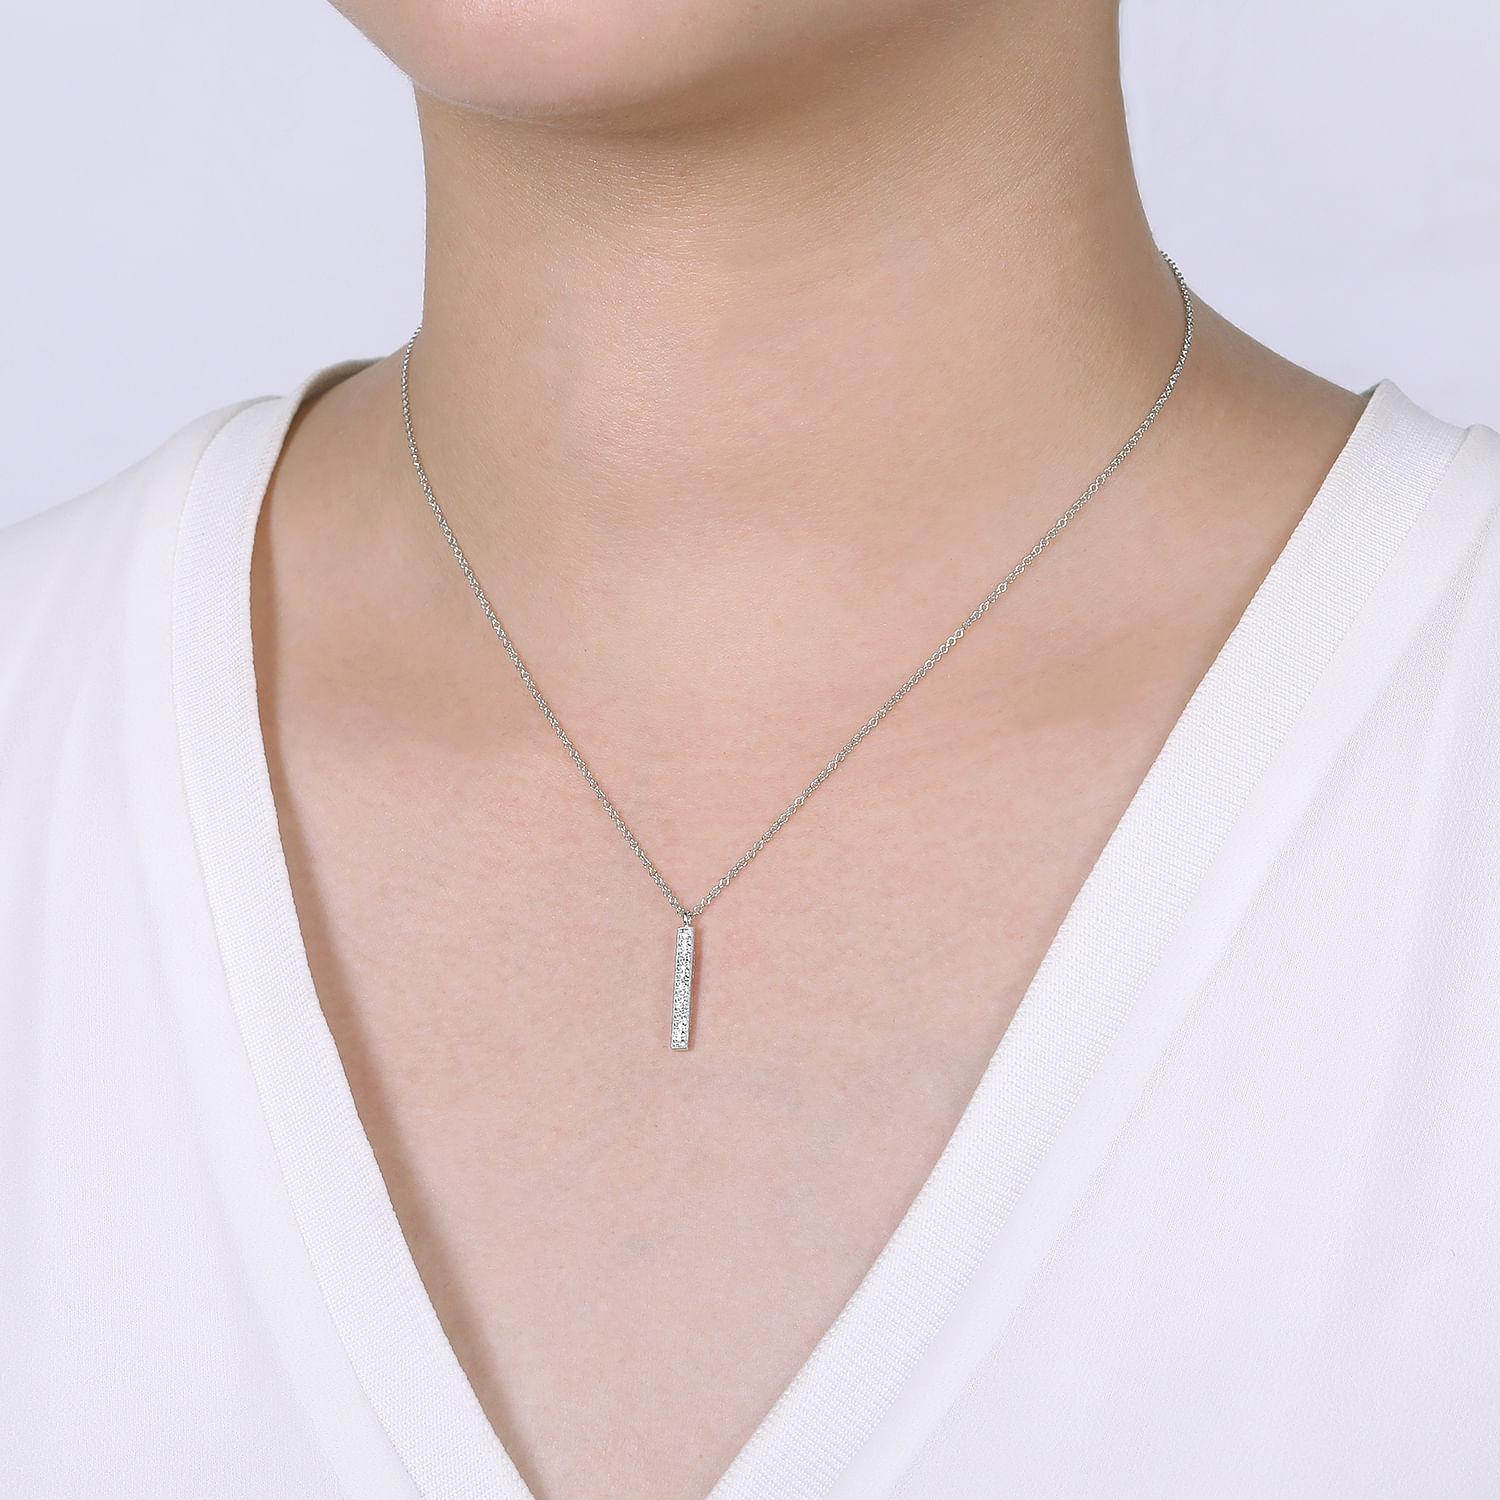 14K White Gold Diamond Drop Pendant Necklace